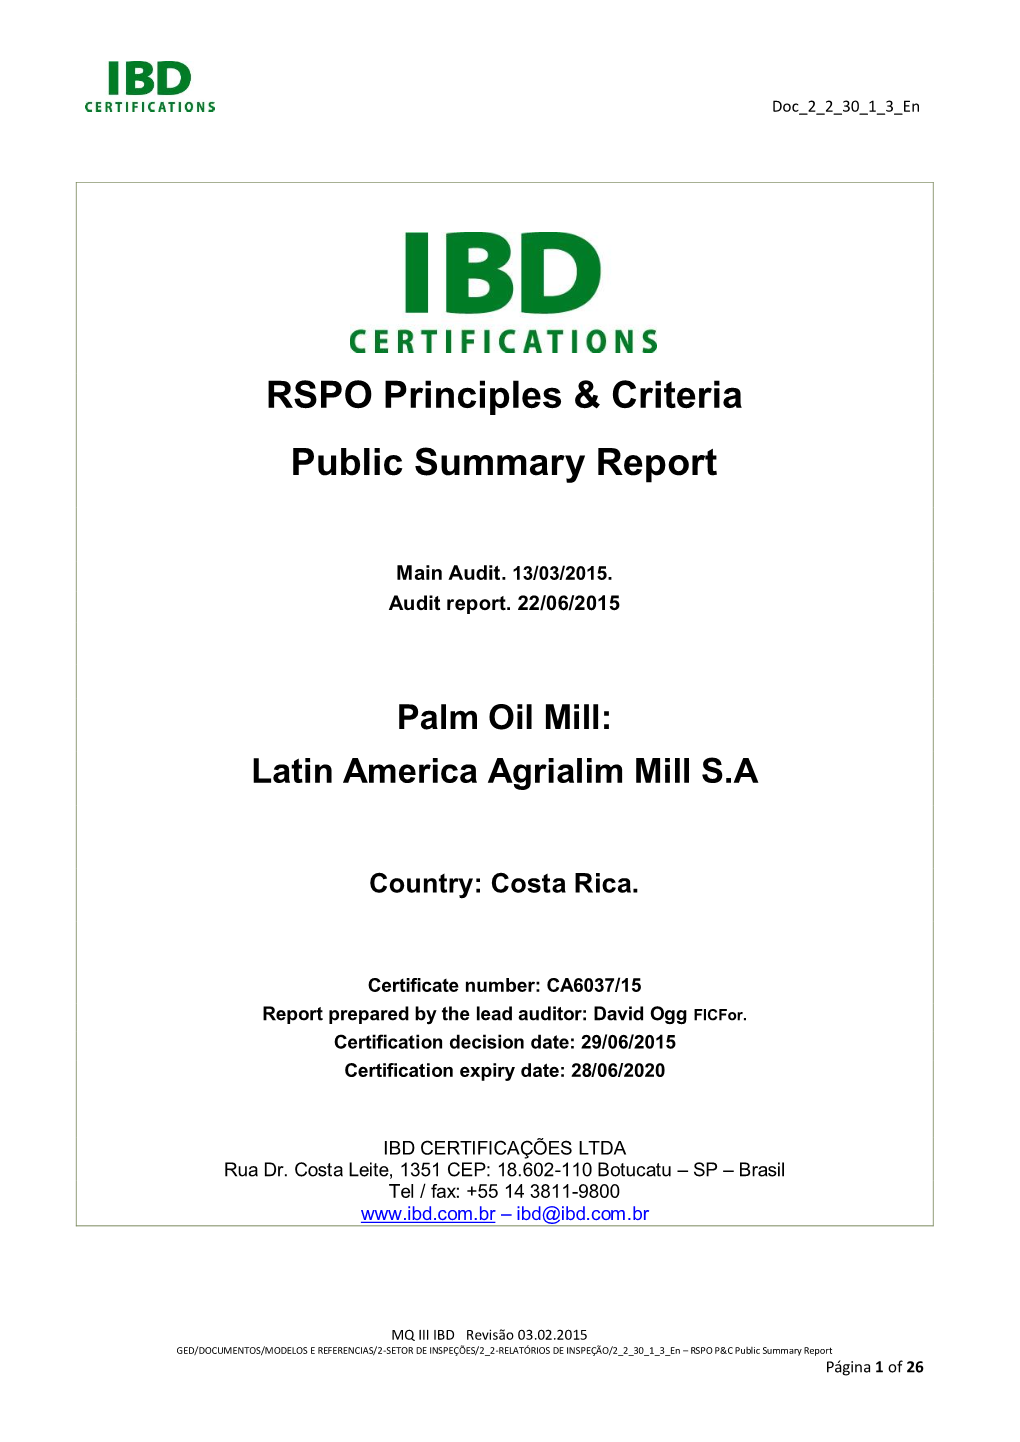 RSPO Principles & Criteria Public Summary Report